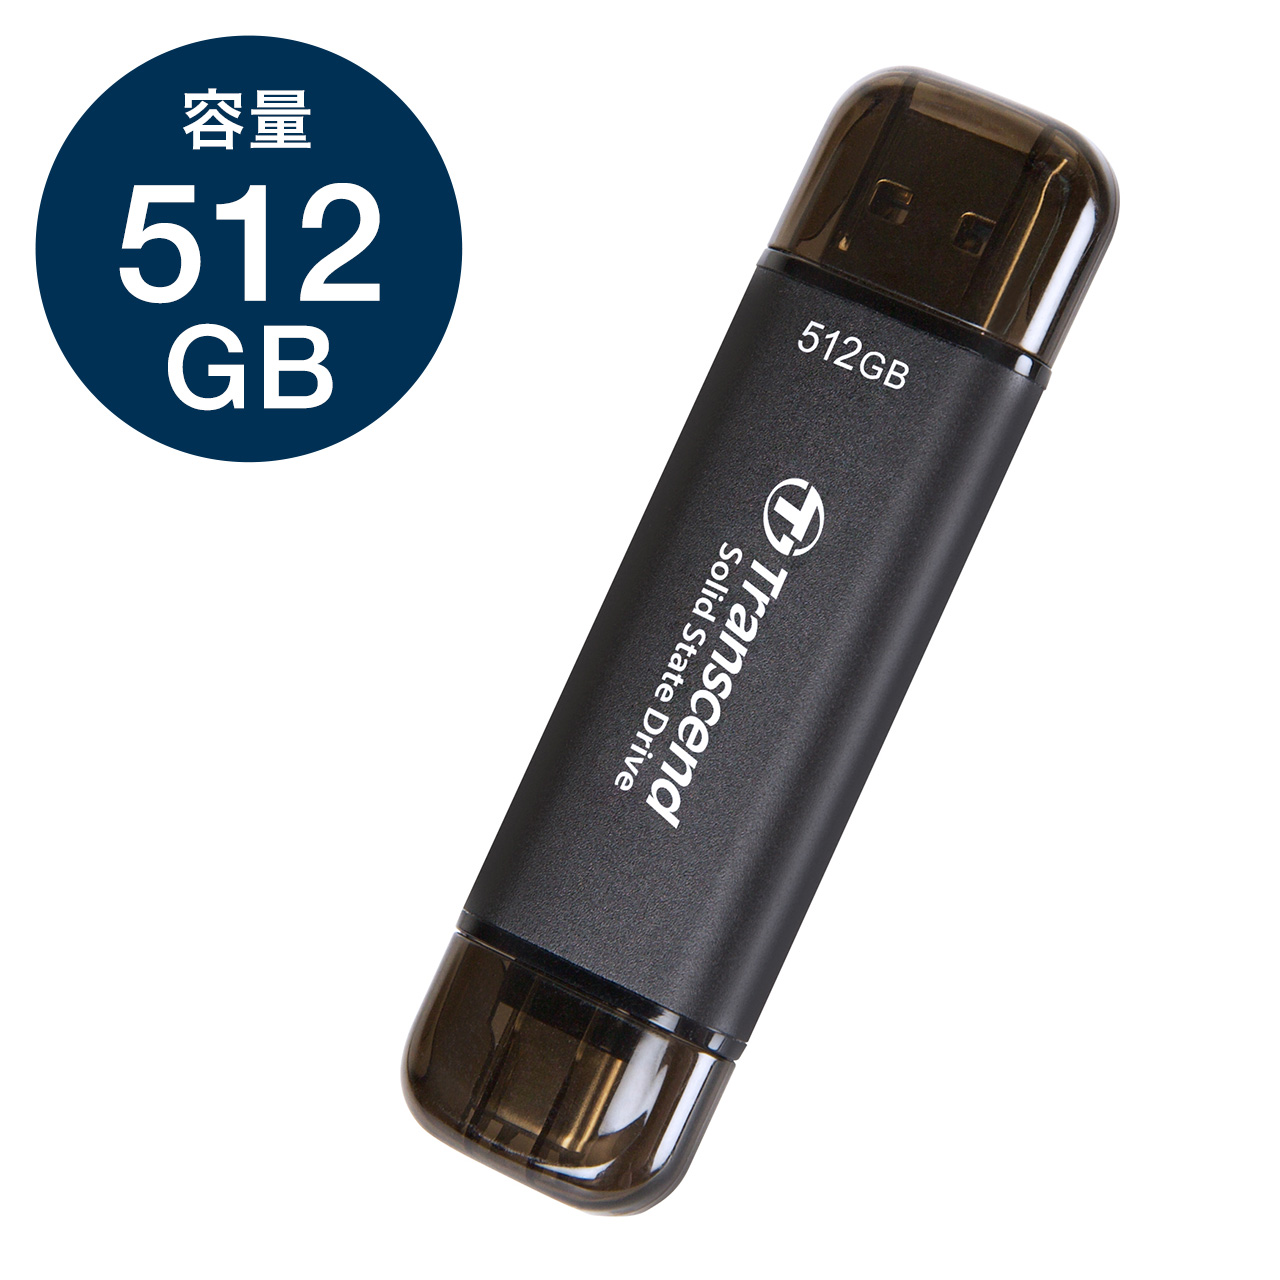 Transcend スティックSSD 512GB ESD310 ポータブルSSD USB3.2 Gen2 ...